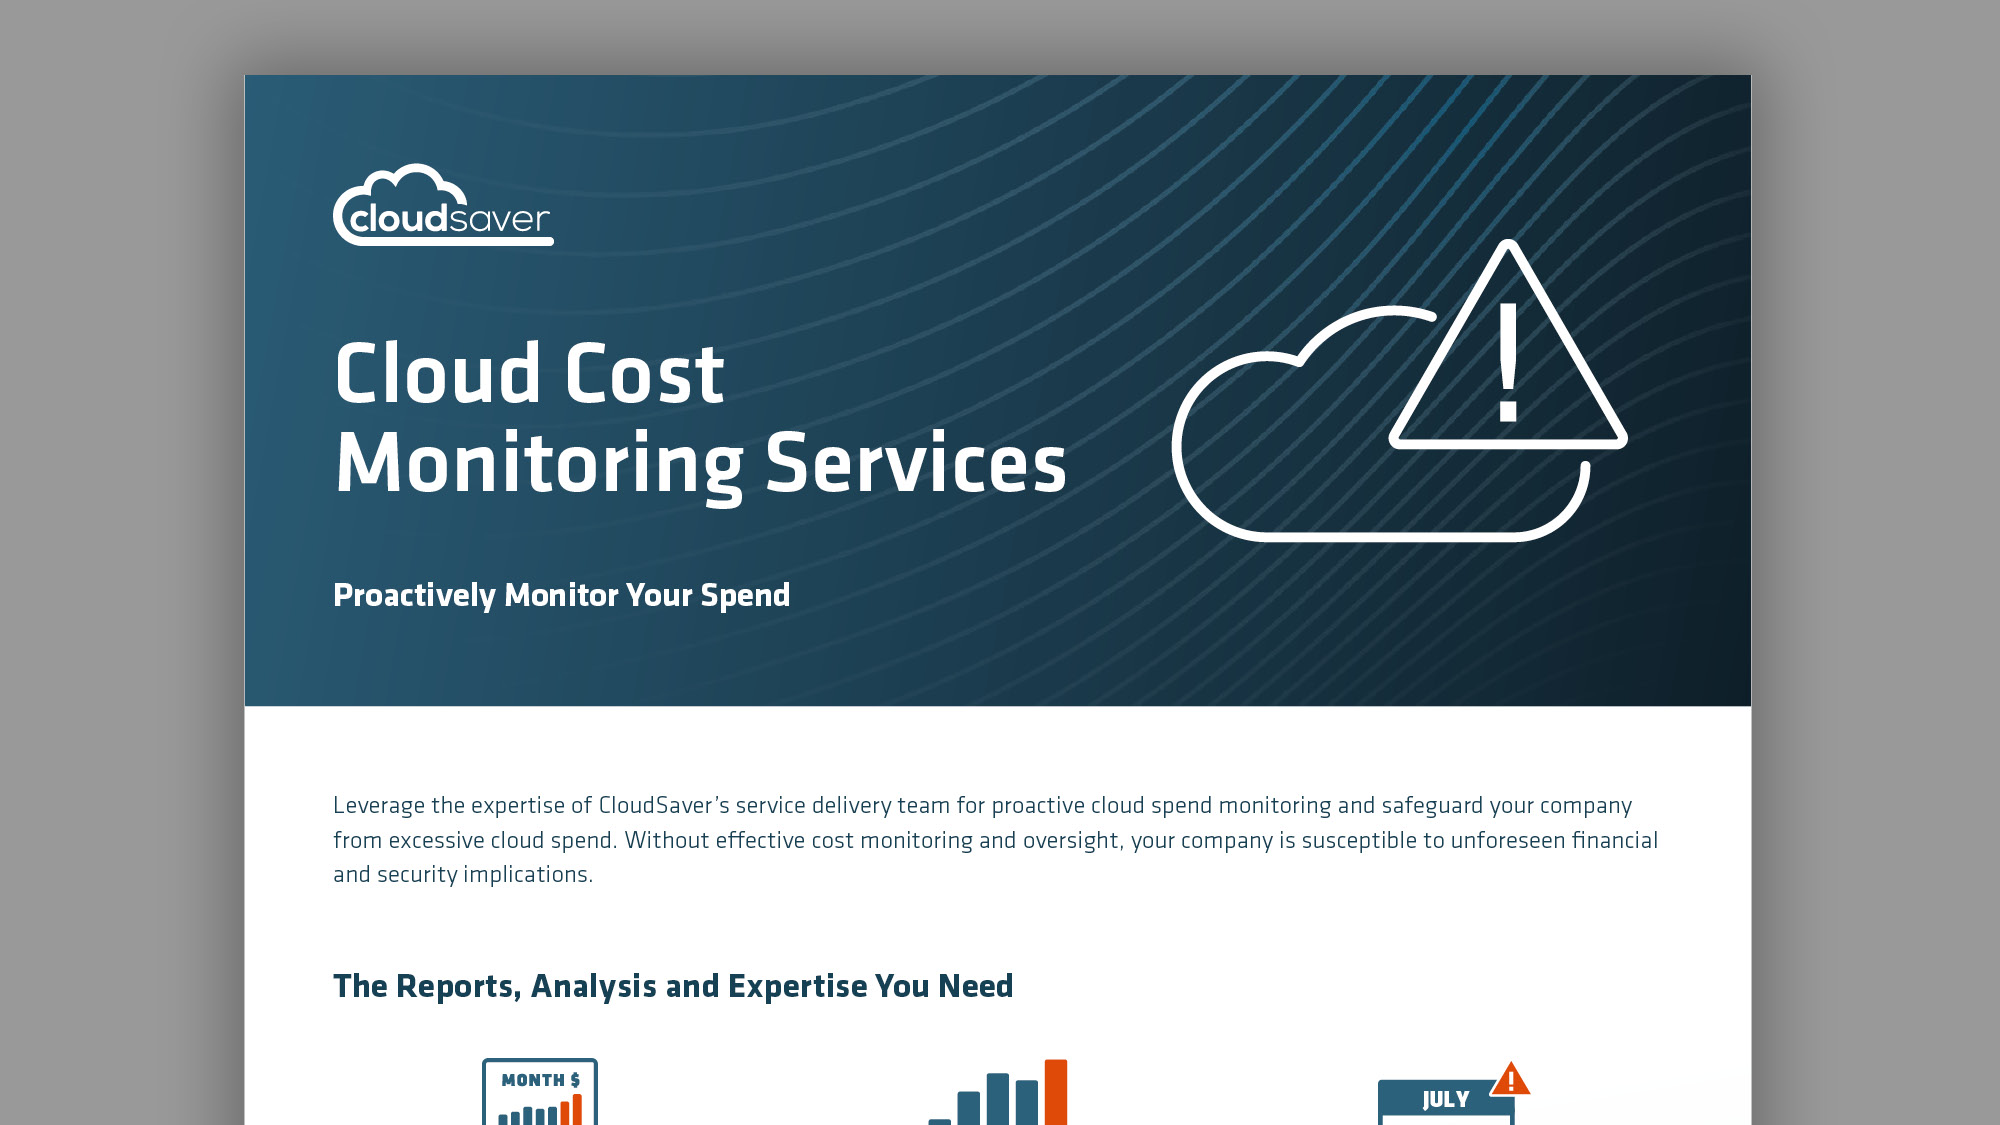 Cloudsaver – Cloud Cost Monitoring